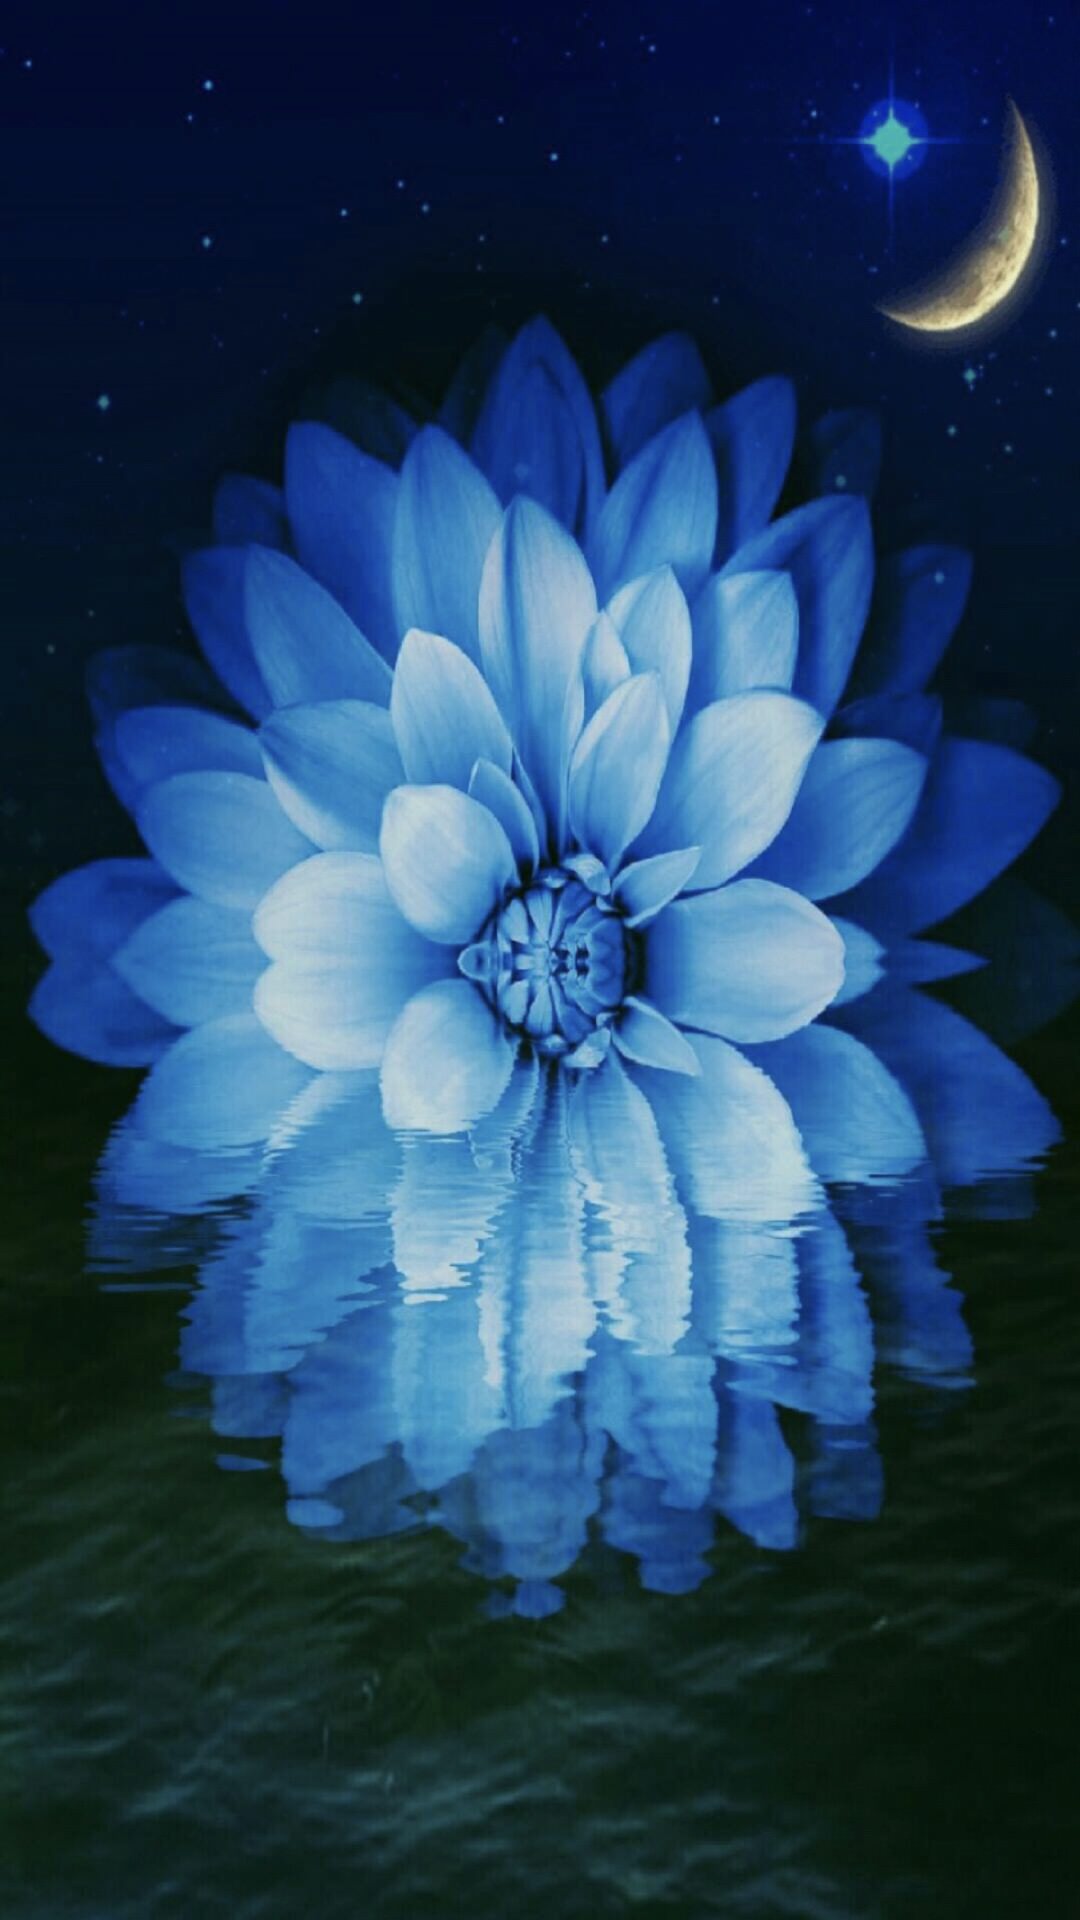 Flower moon | wallpaper.sc iPhone6sPlus